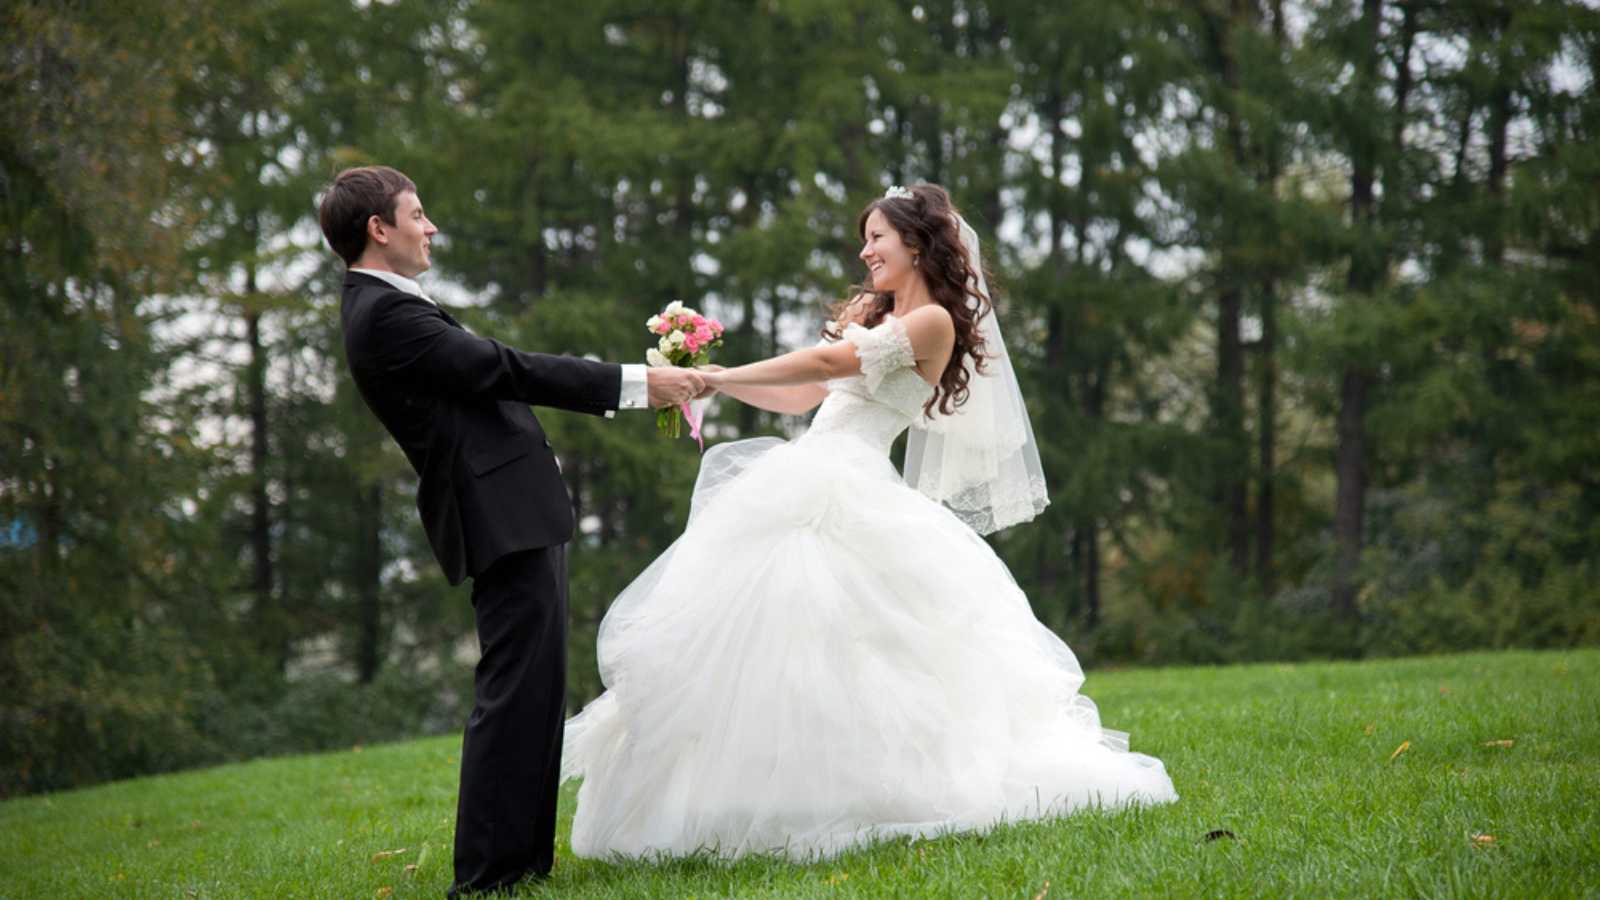 Bride and groom dancing in field